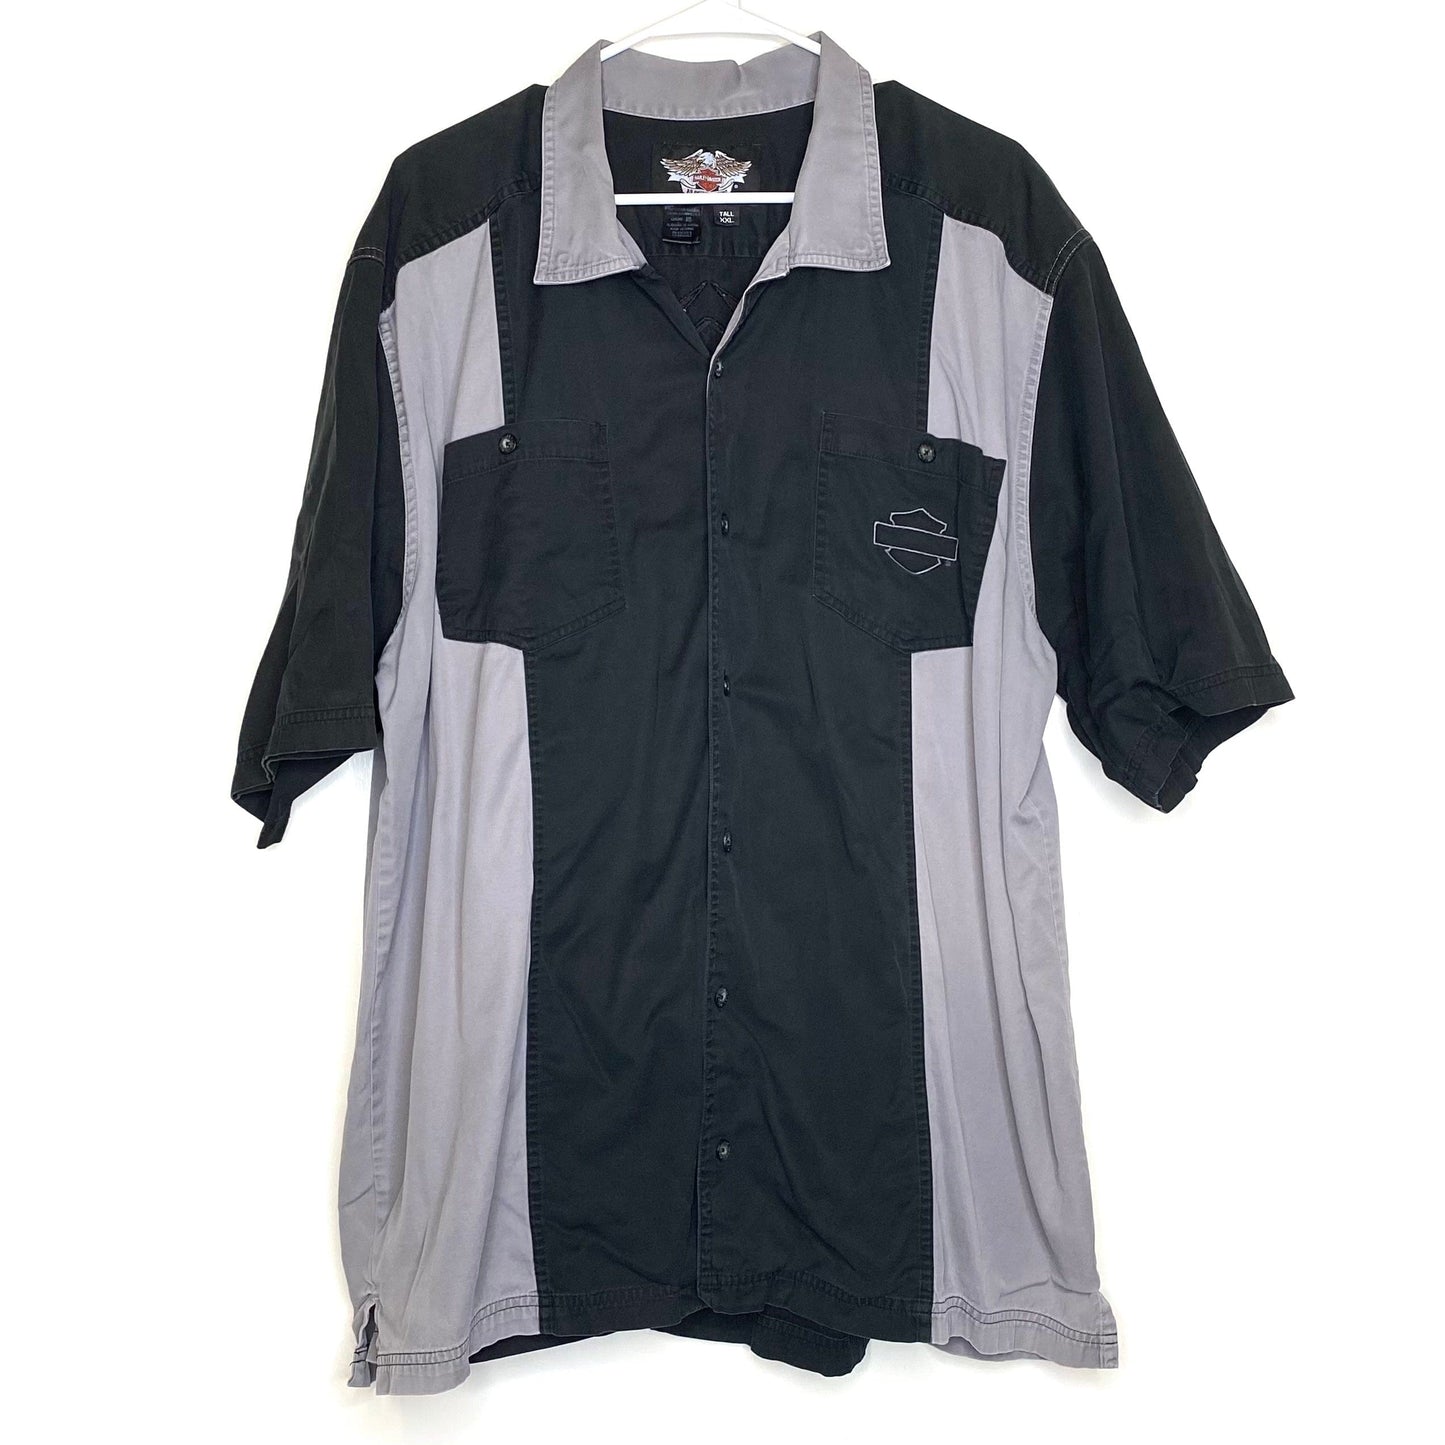 Harley-Davidson Mens Size Tall XXL Black/Gray Colorblock Button-Up Shirt S/s